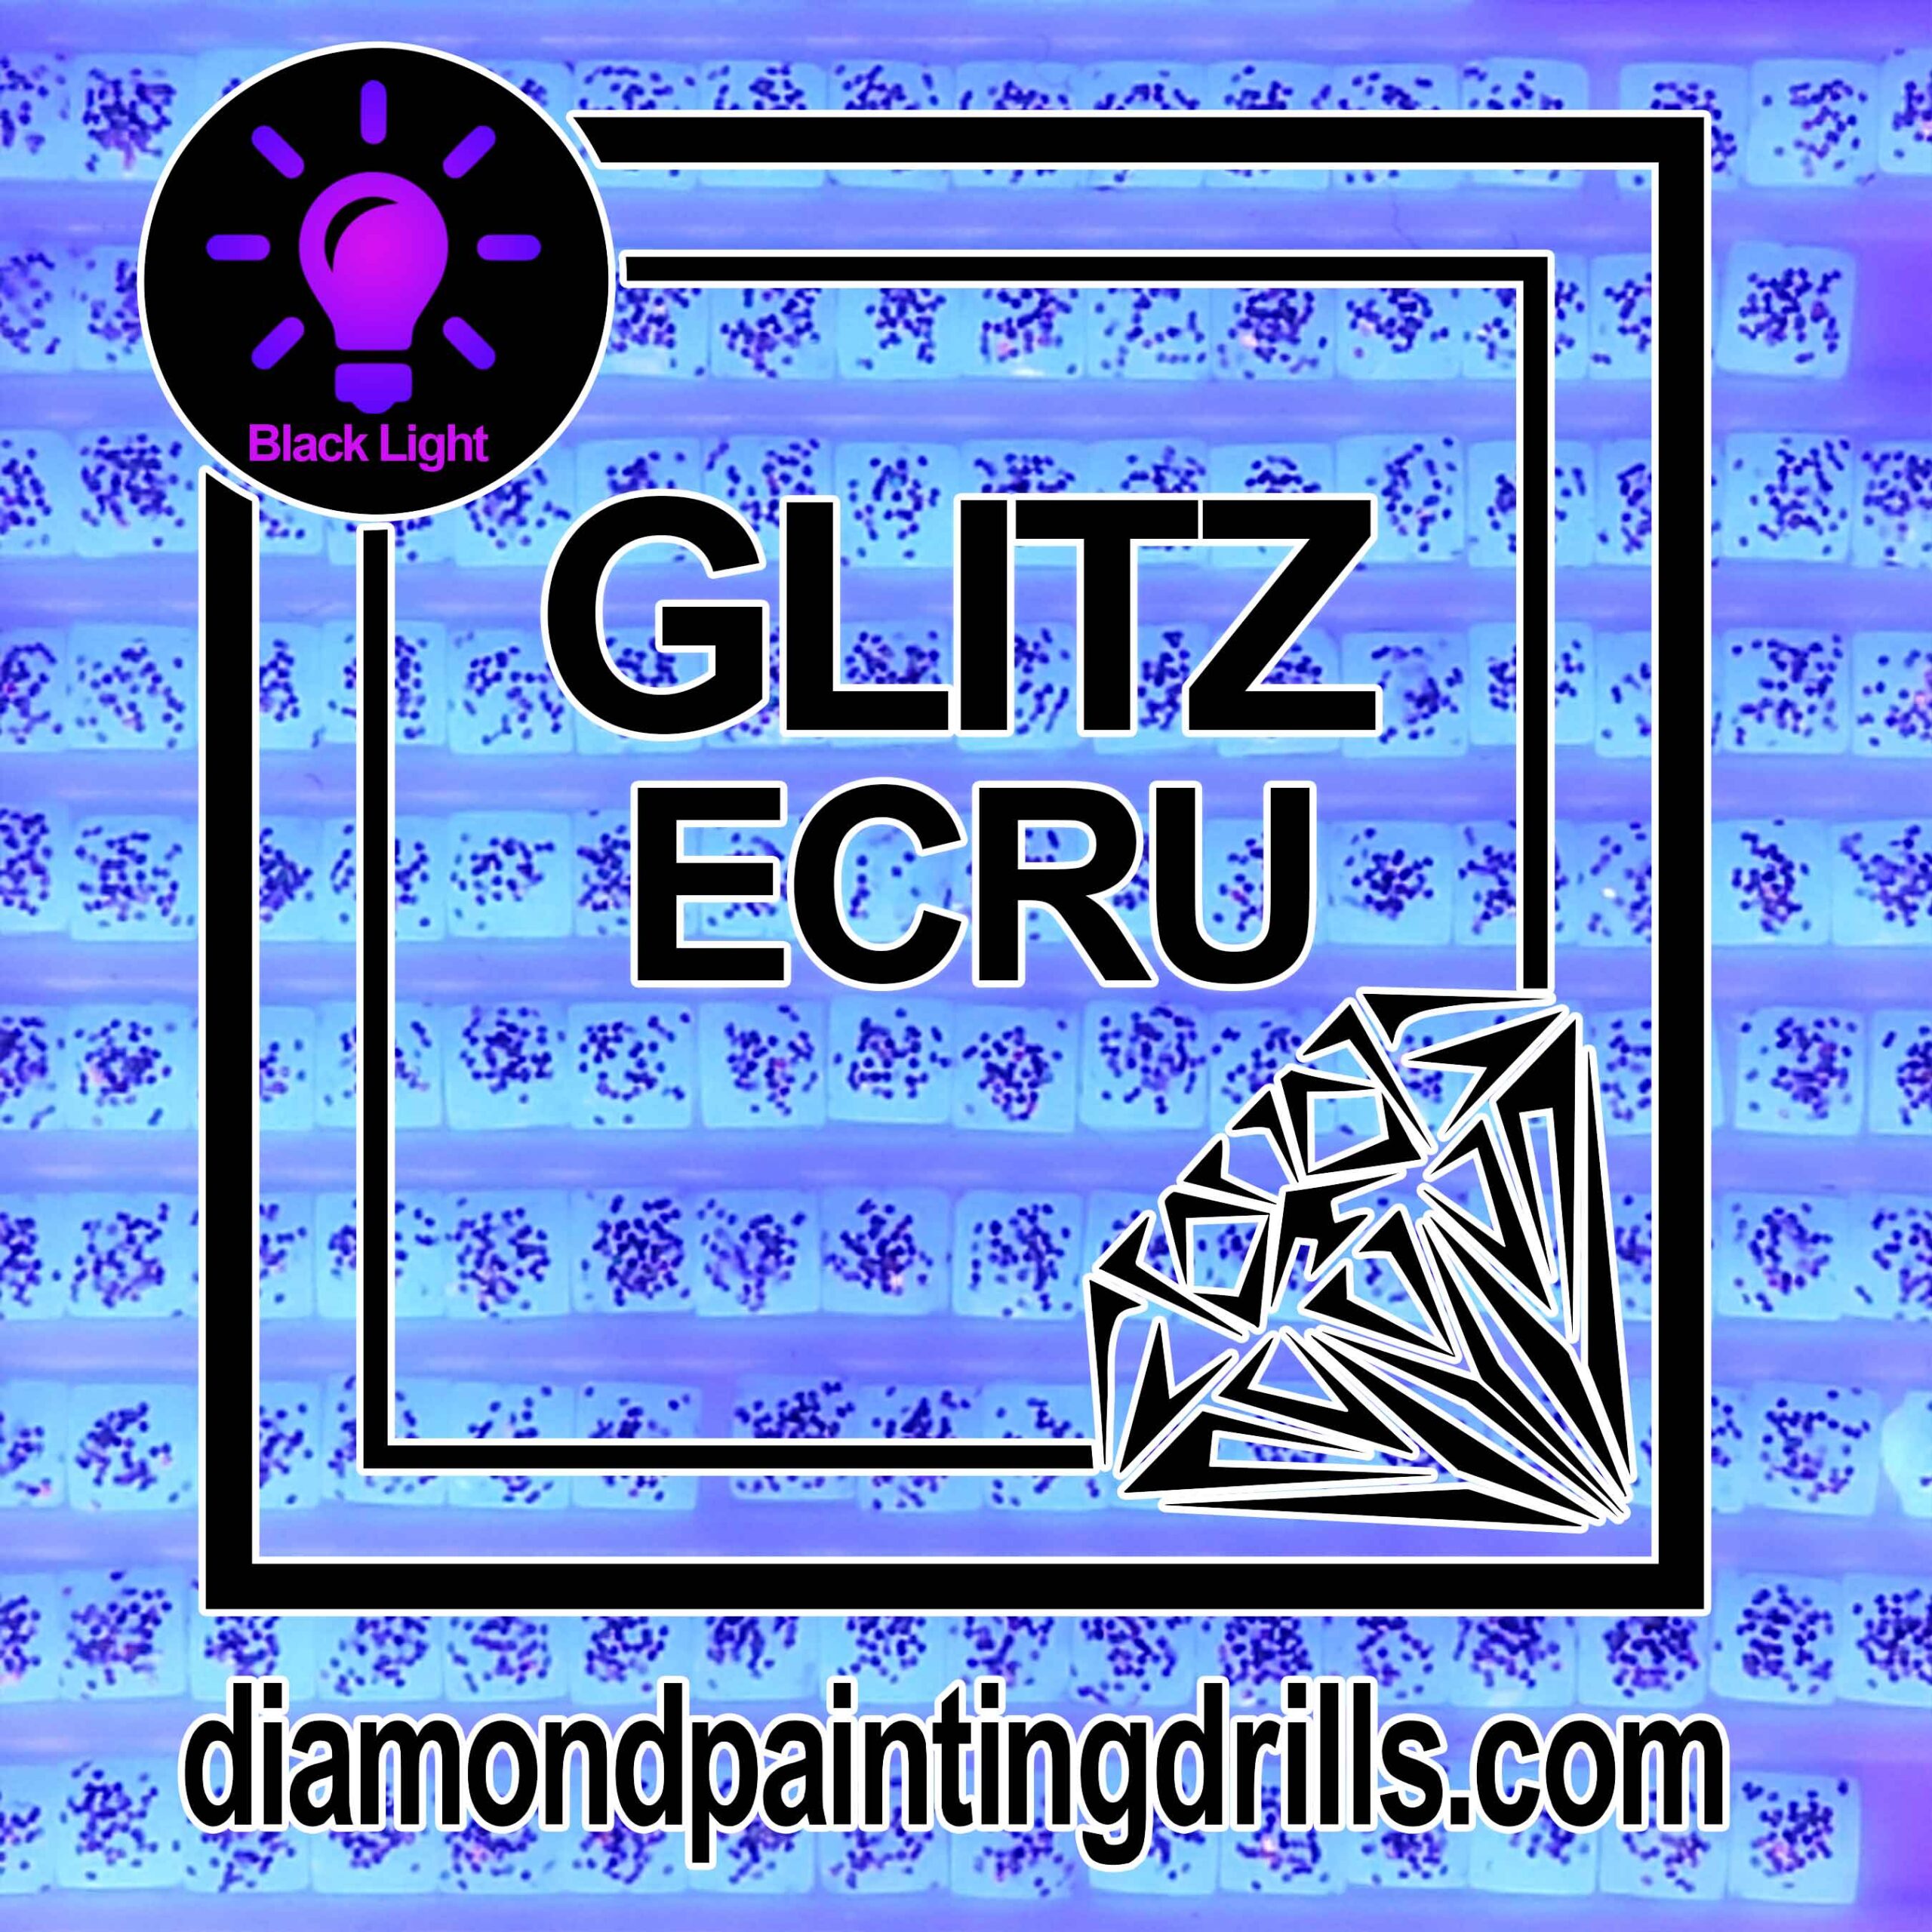 Ecru Glitz Diamond Painting Drills